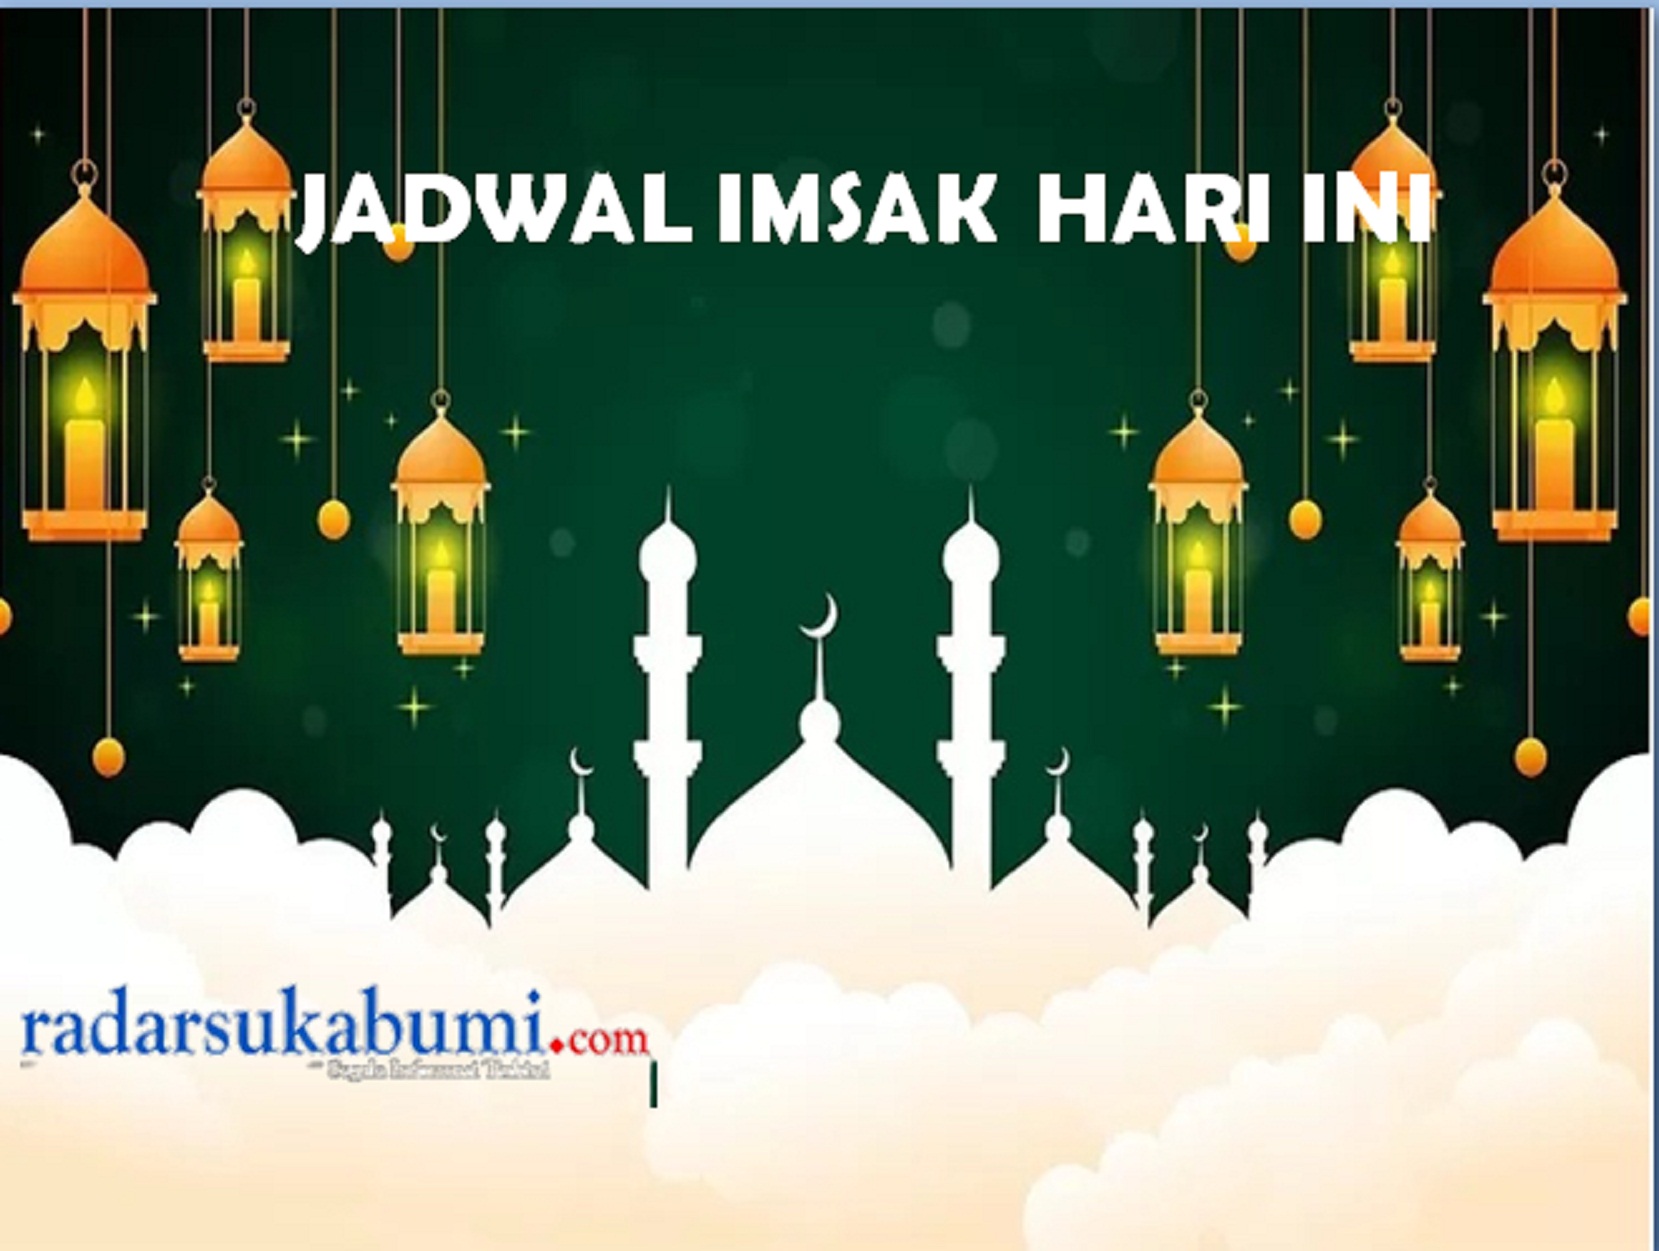 Jadwal Imsak Ramadan